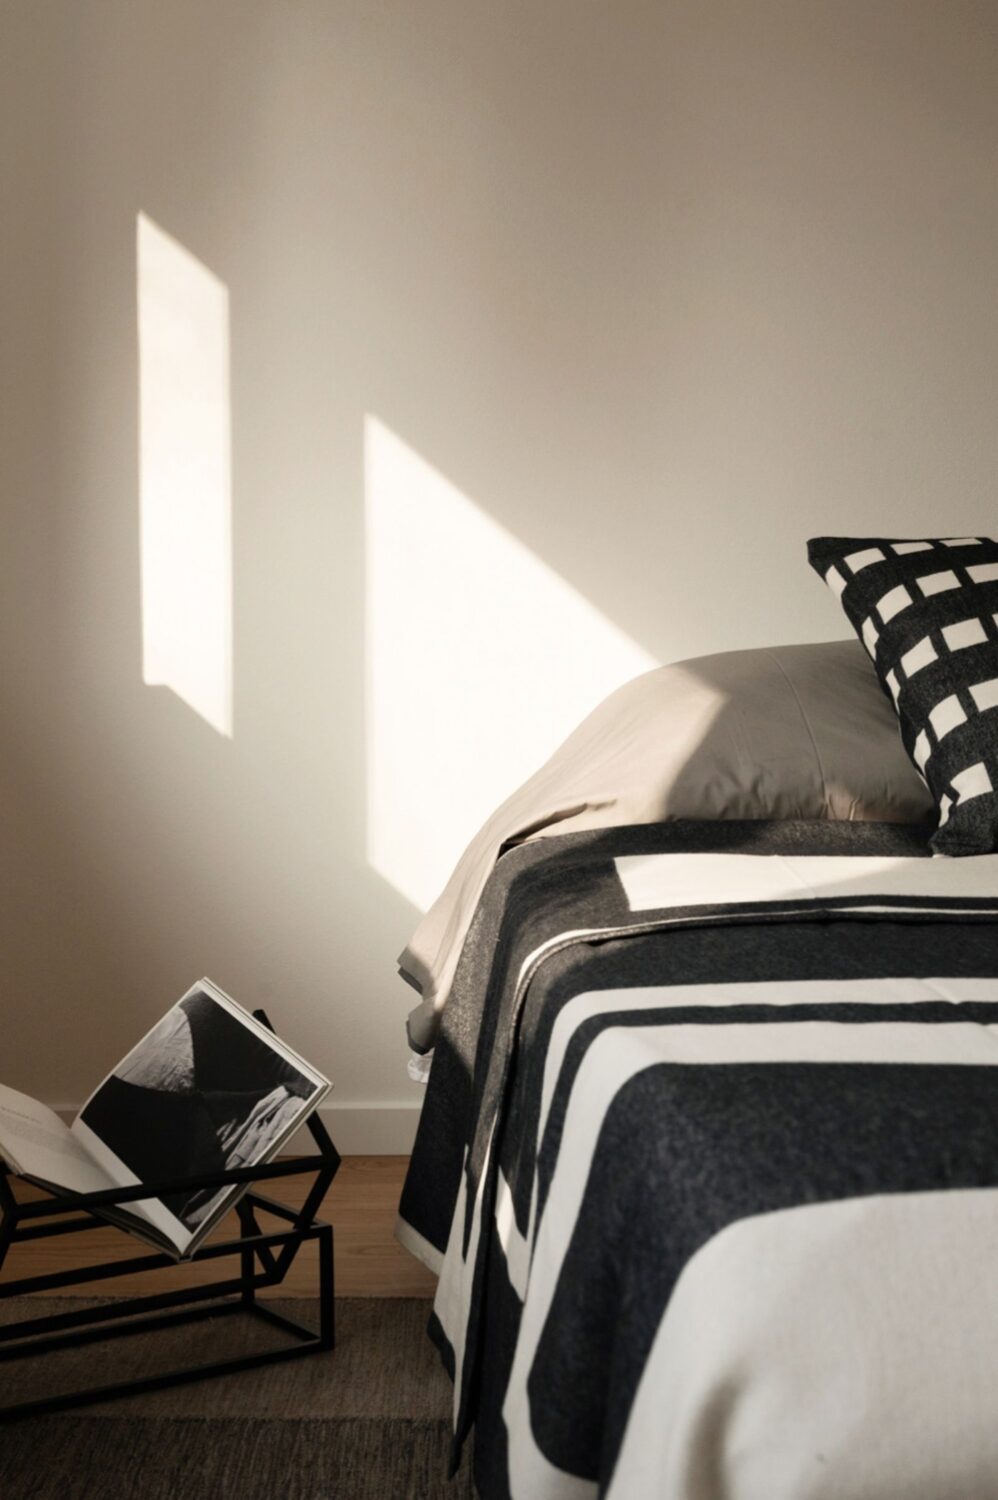 Nordic, minimalist bedroom decor